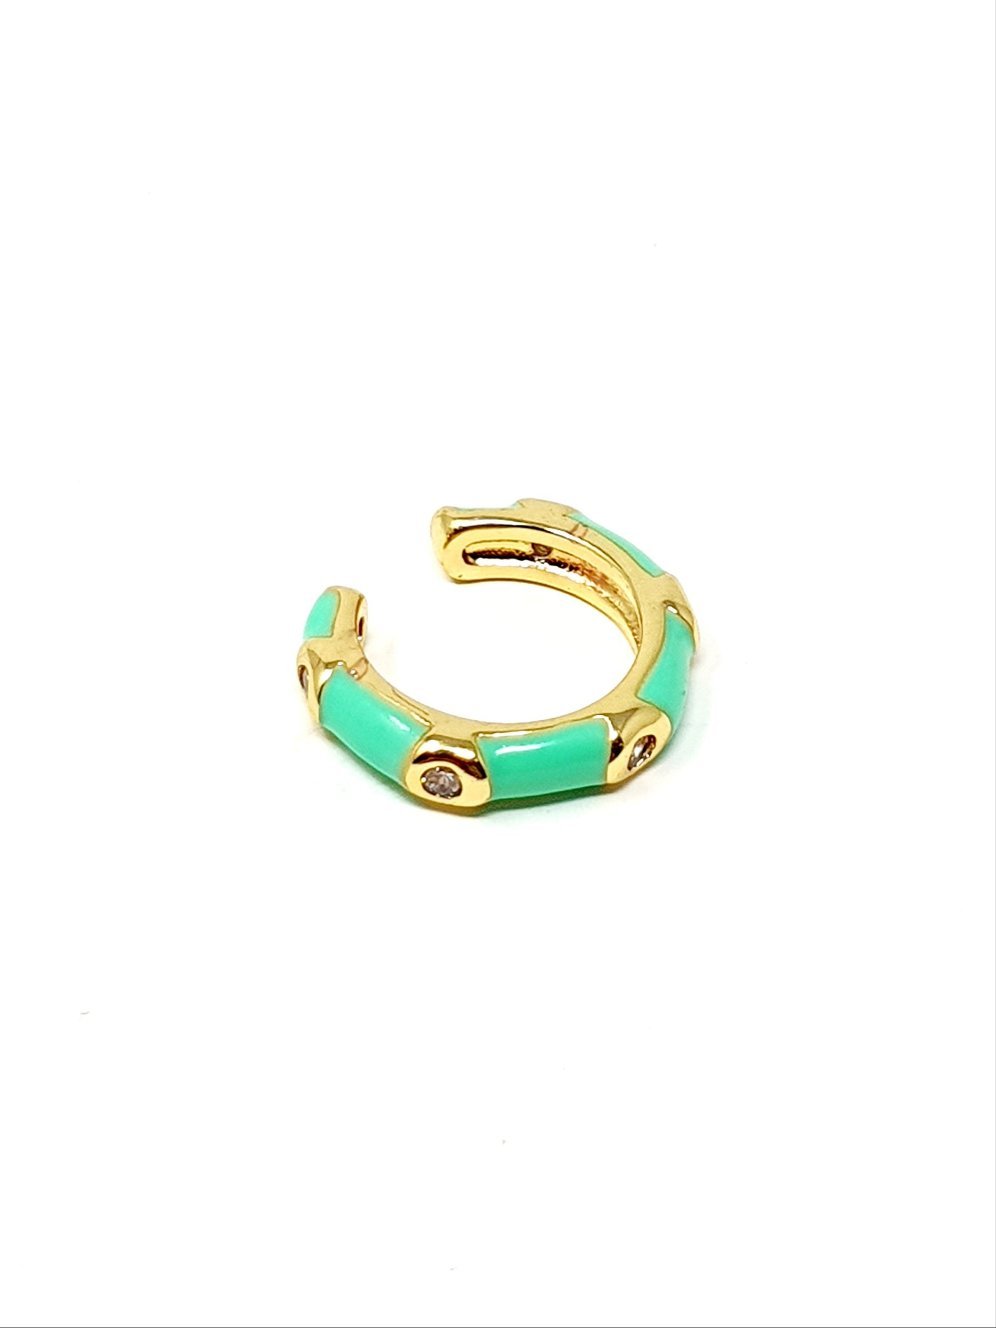 Ear cuff “Positano” Gold & Verde Tiffany - 333HOPE333